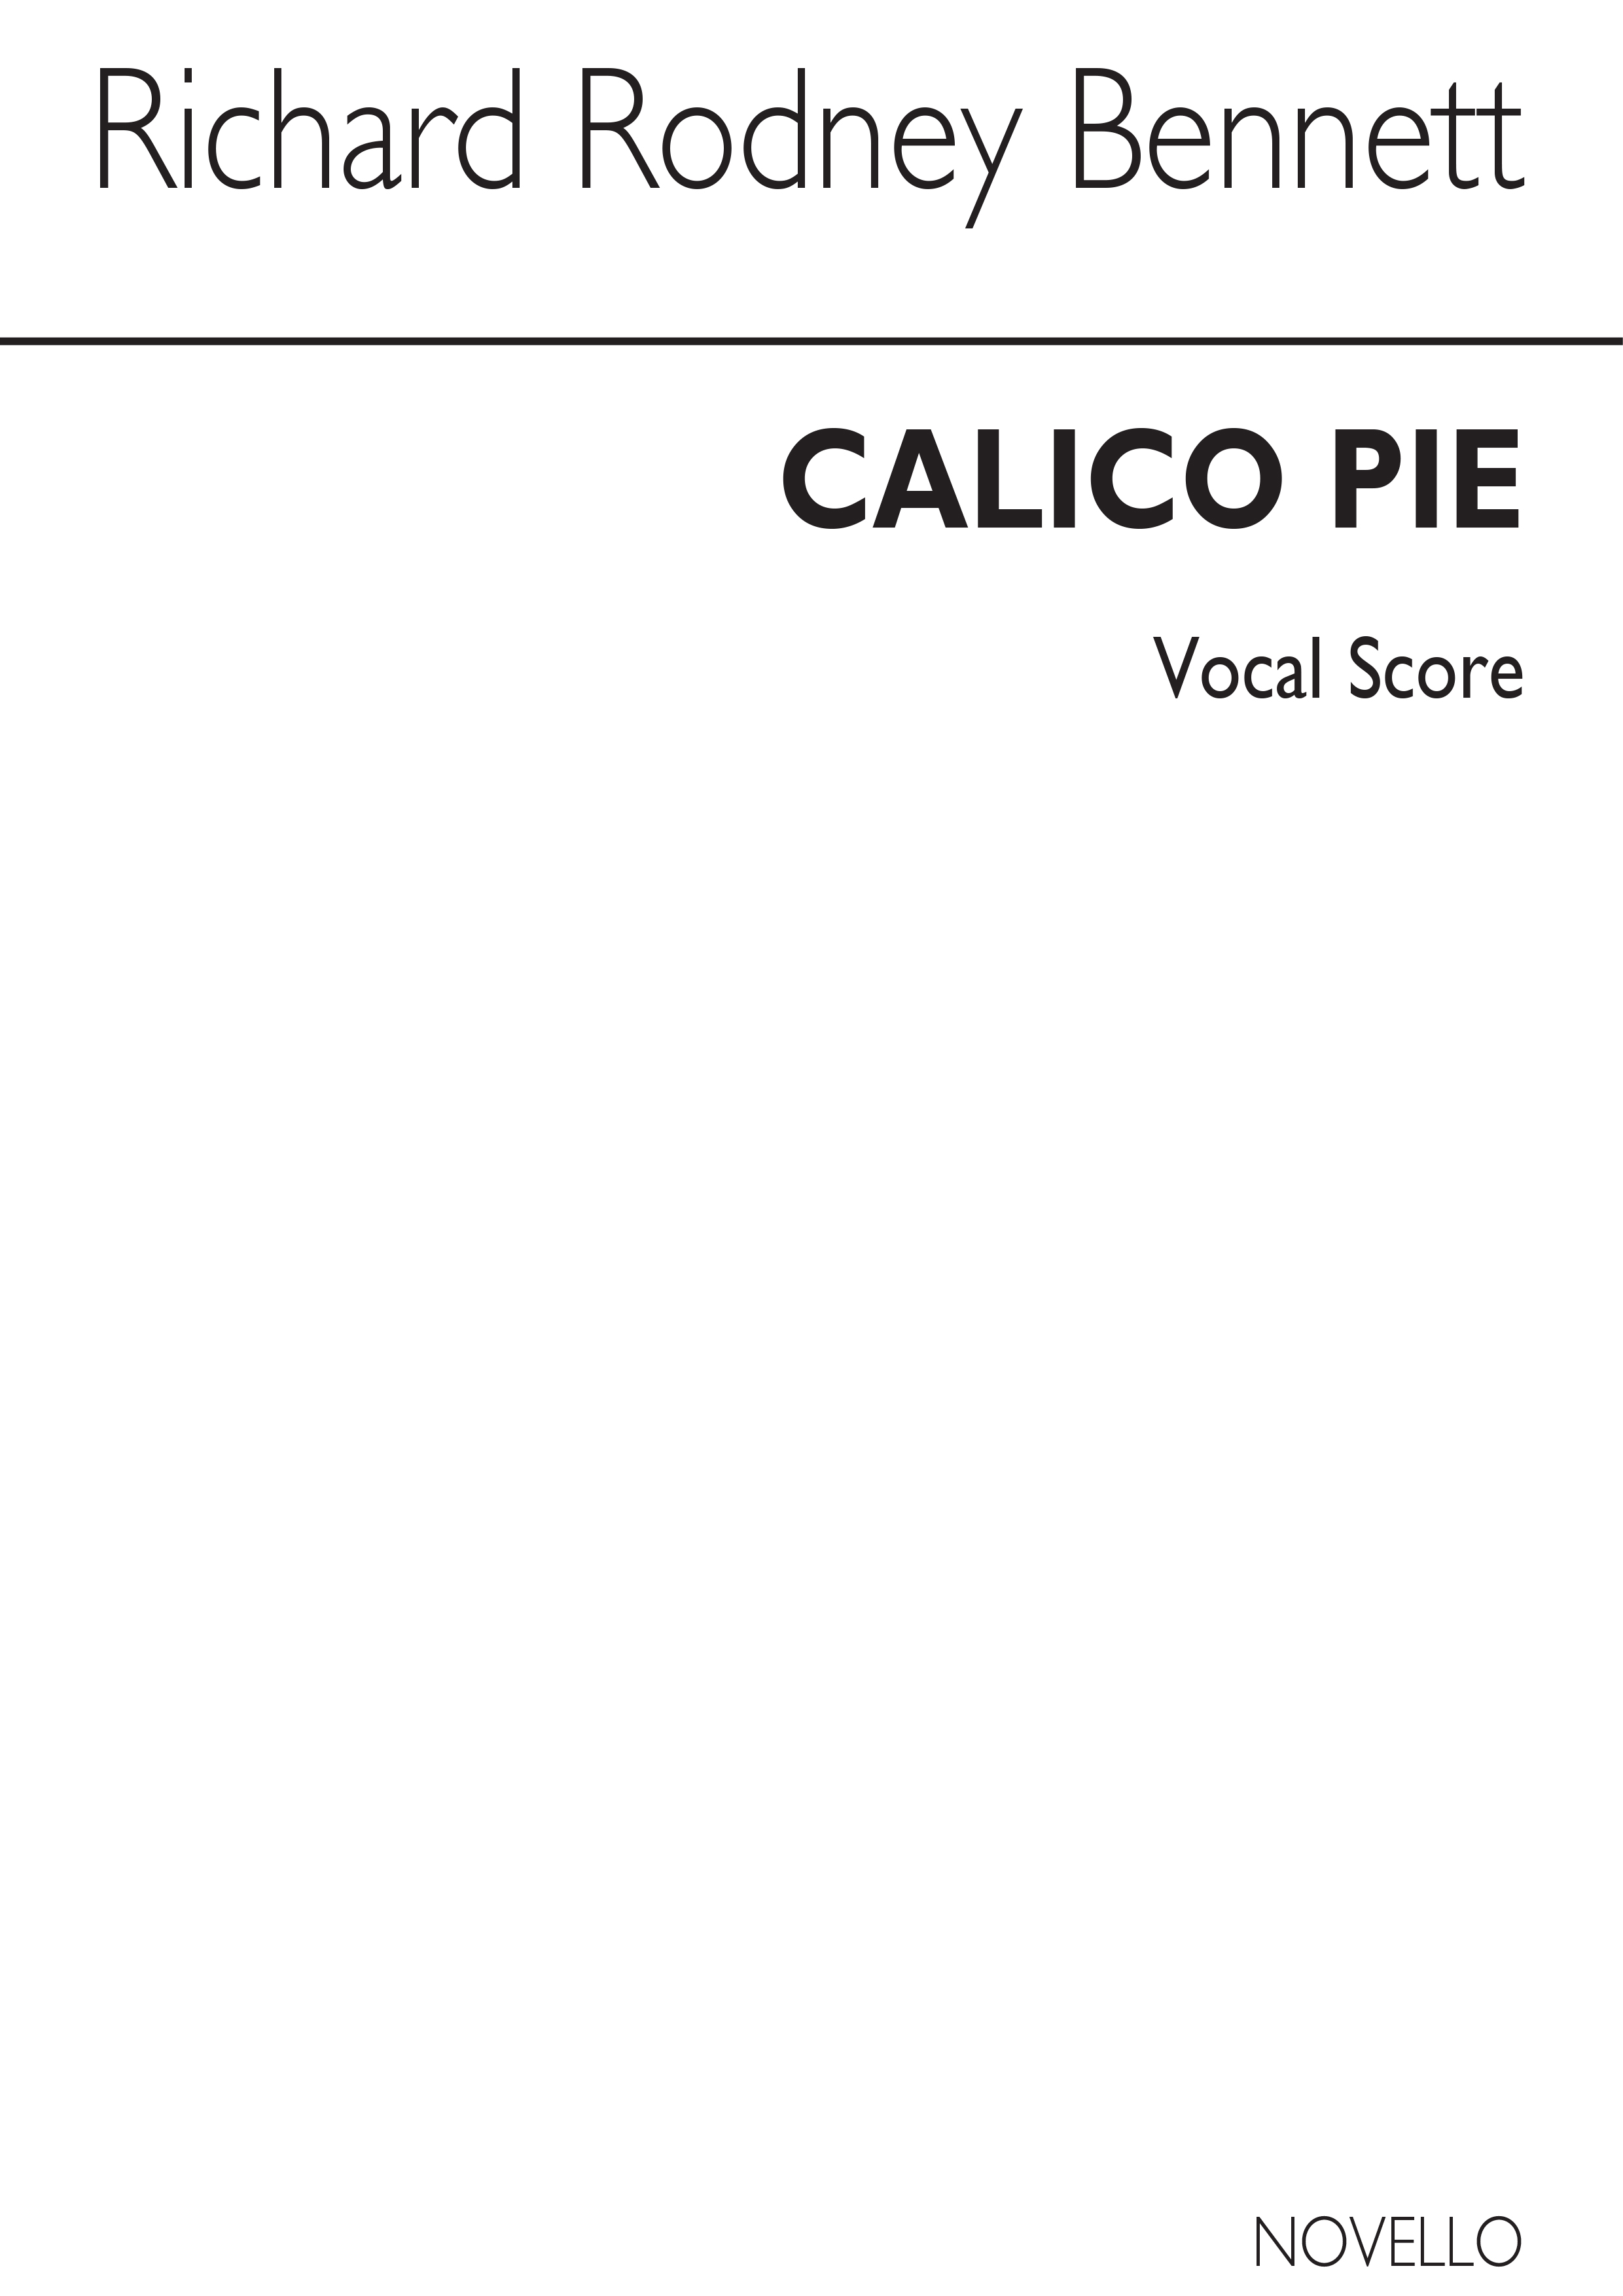 Richard Rodney Bennett: Calico Pie